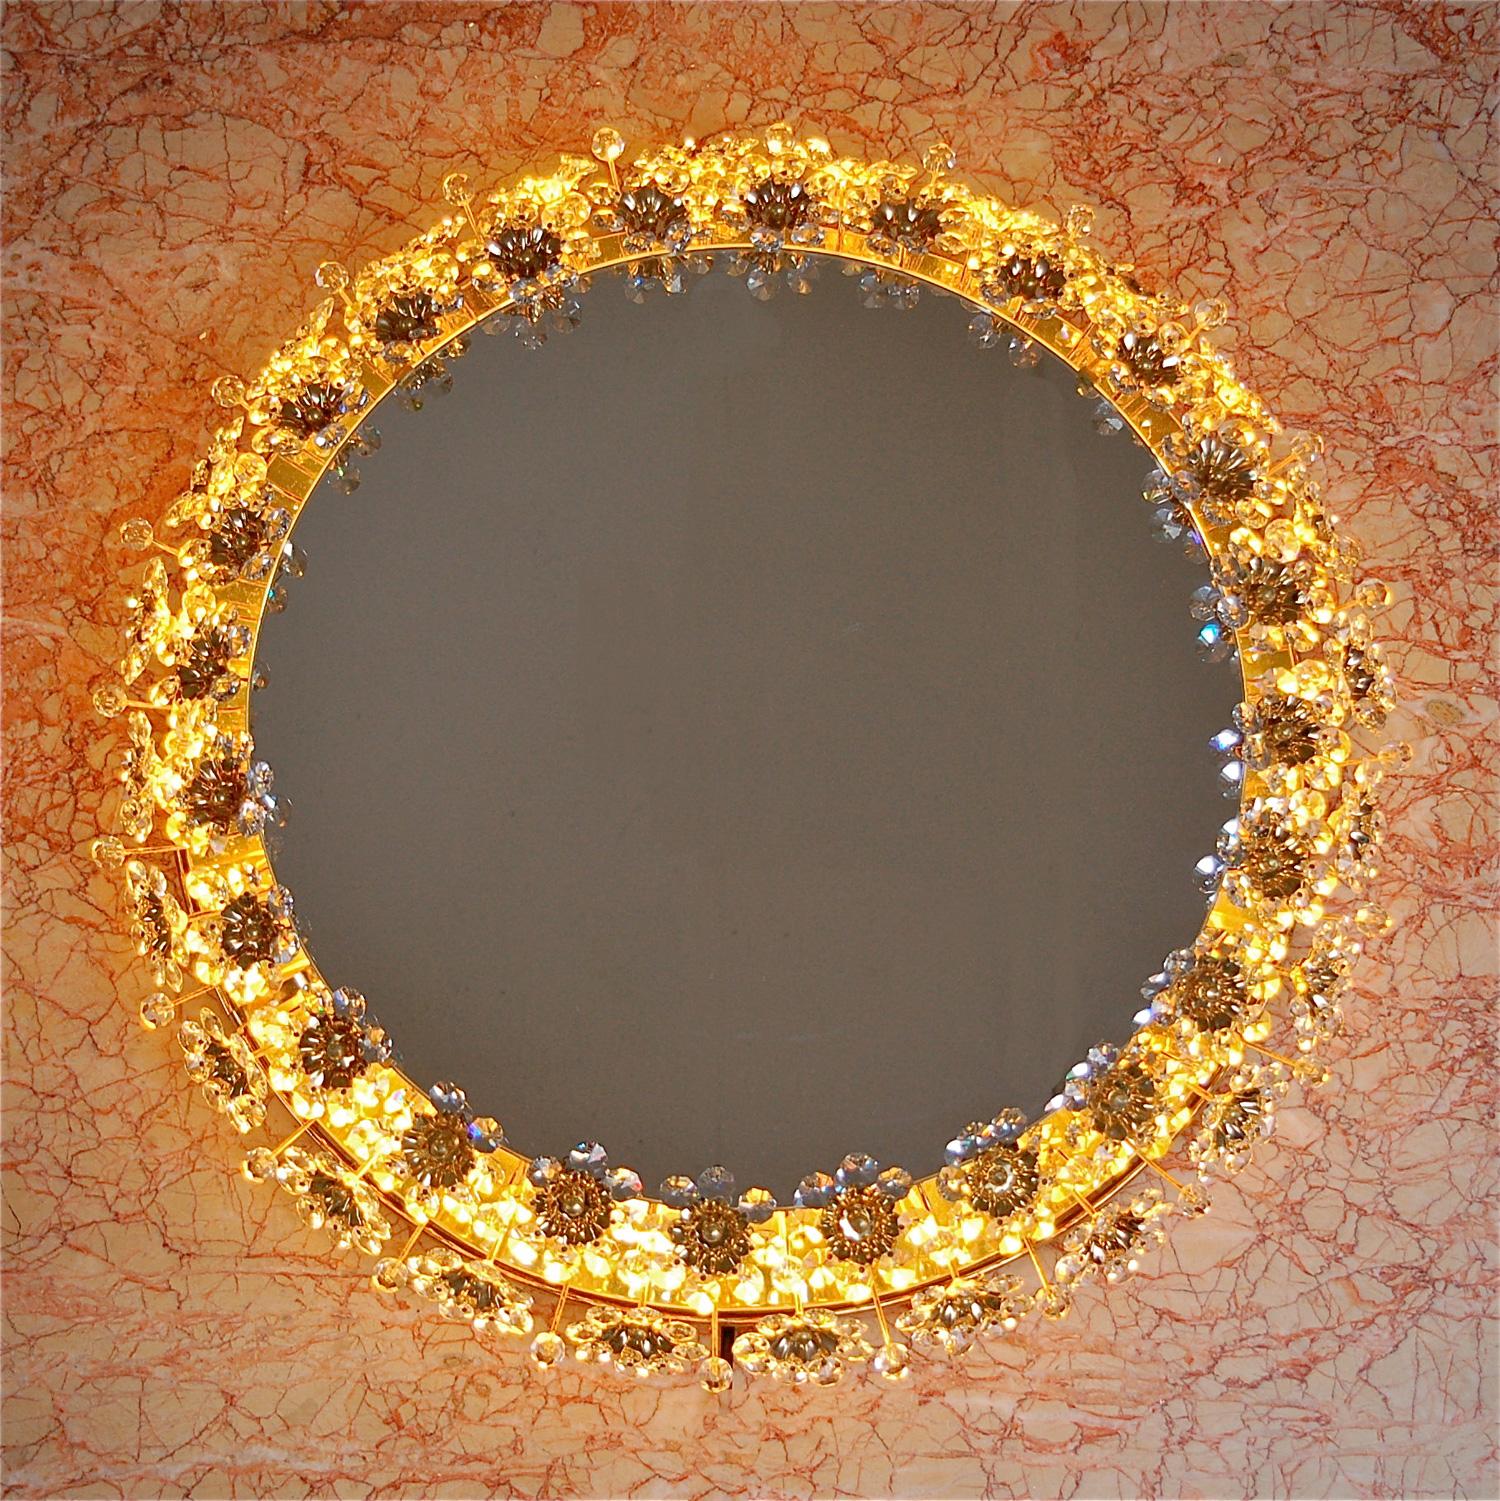 Circular Backlit Mirror with Crystal Flowers by Palwa, circa 1960s (Moderne der Mitte des Jahrhunderts)